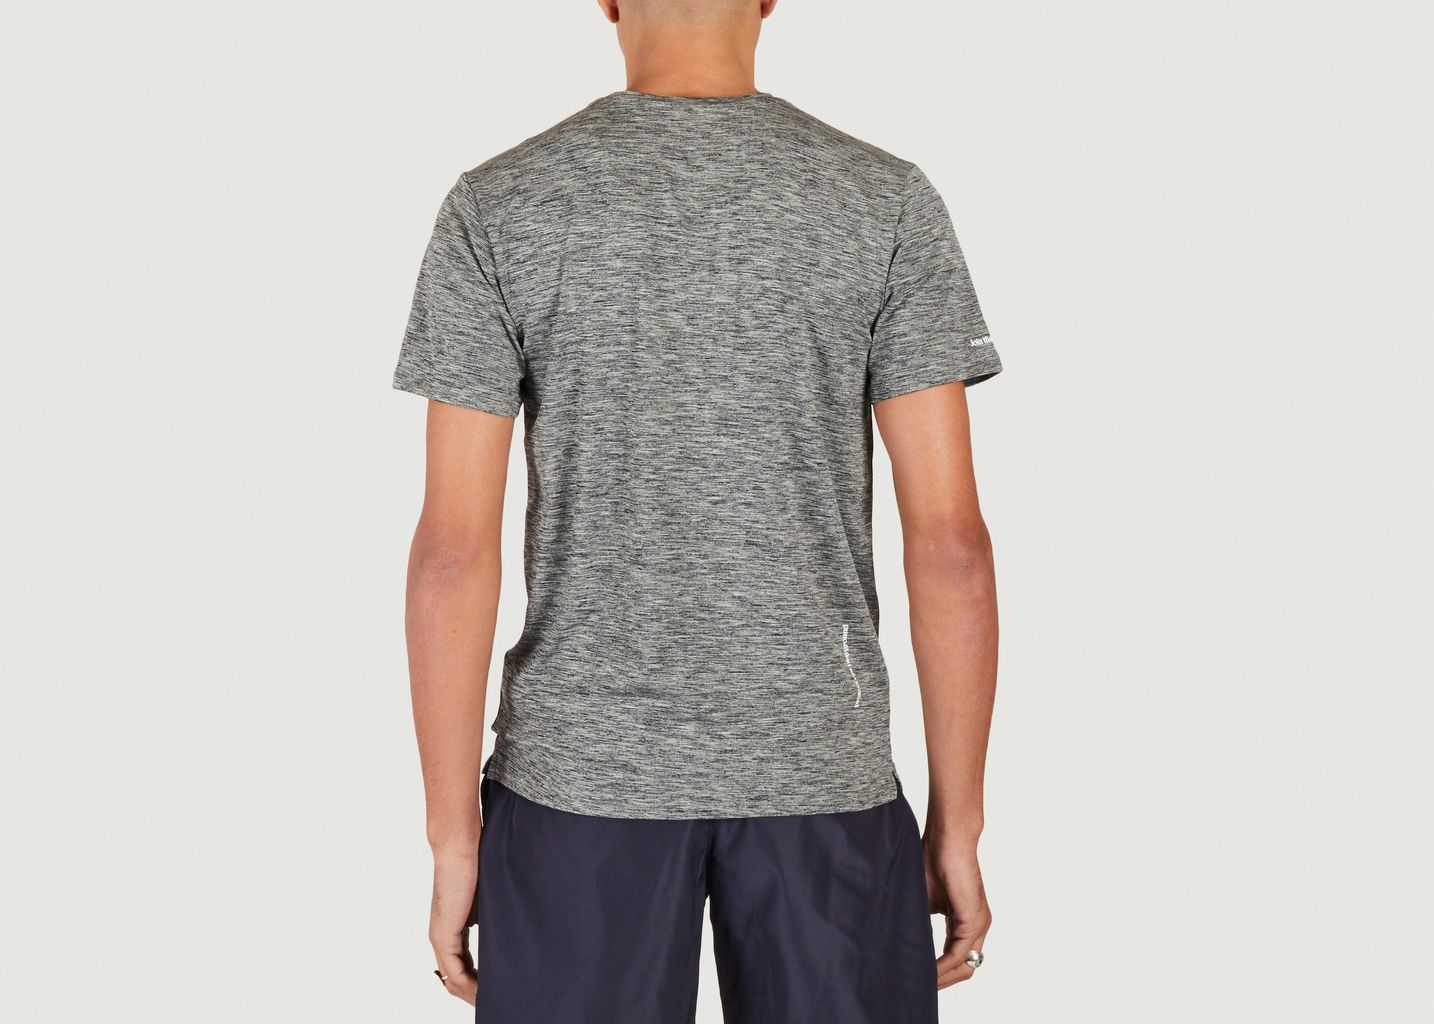 Technical T-shirt Agility - Circle Sportswear